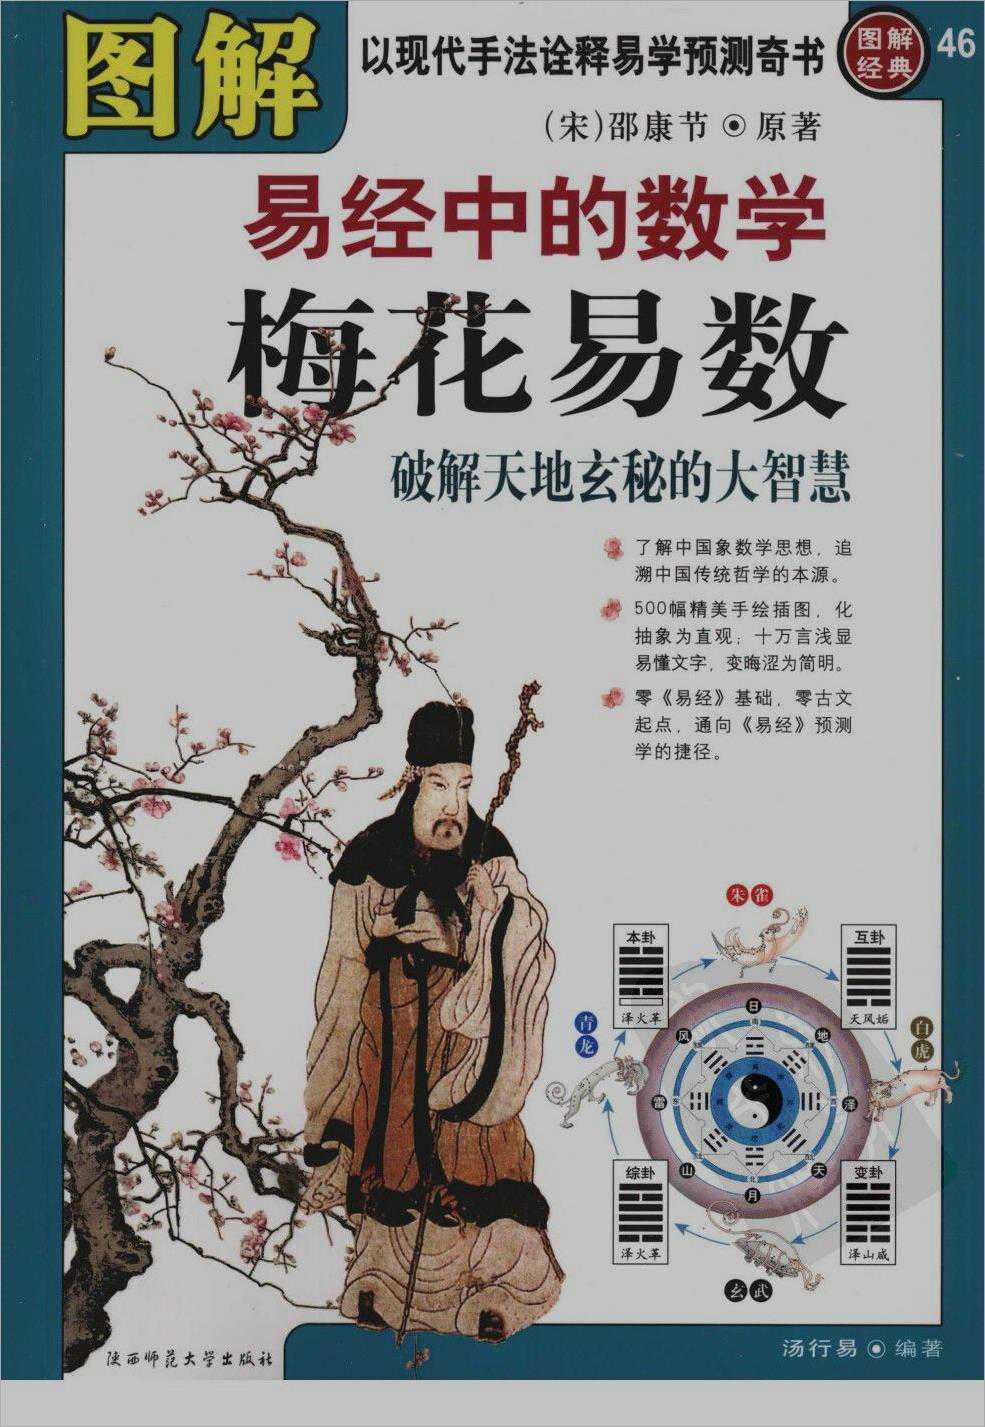 (Song) Shao Kangjie《 illustration of the plum blossom easy number》.pdf